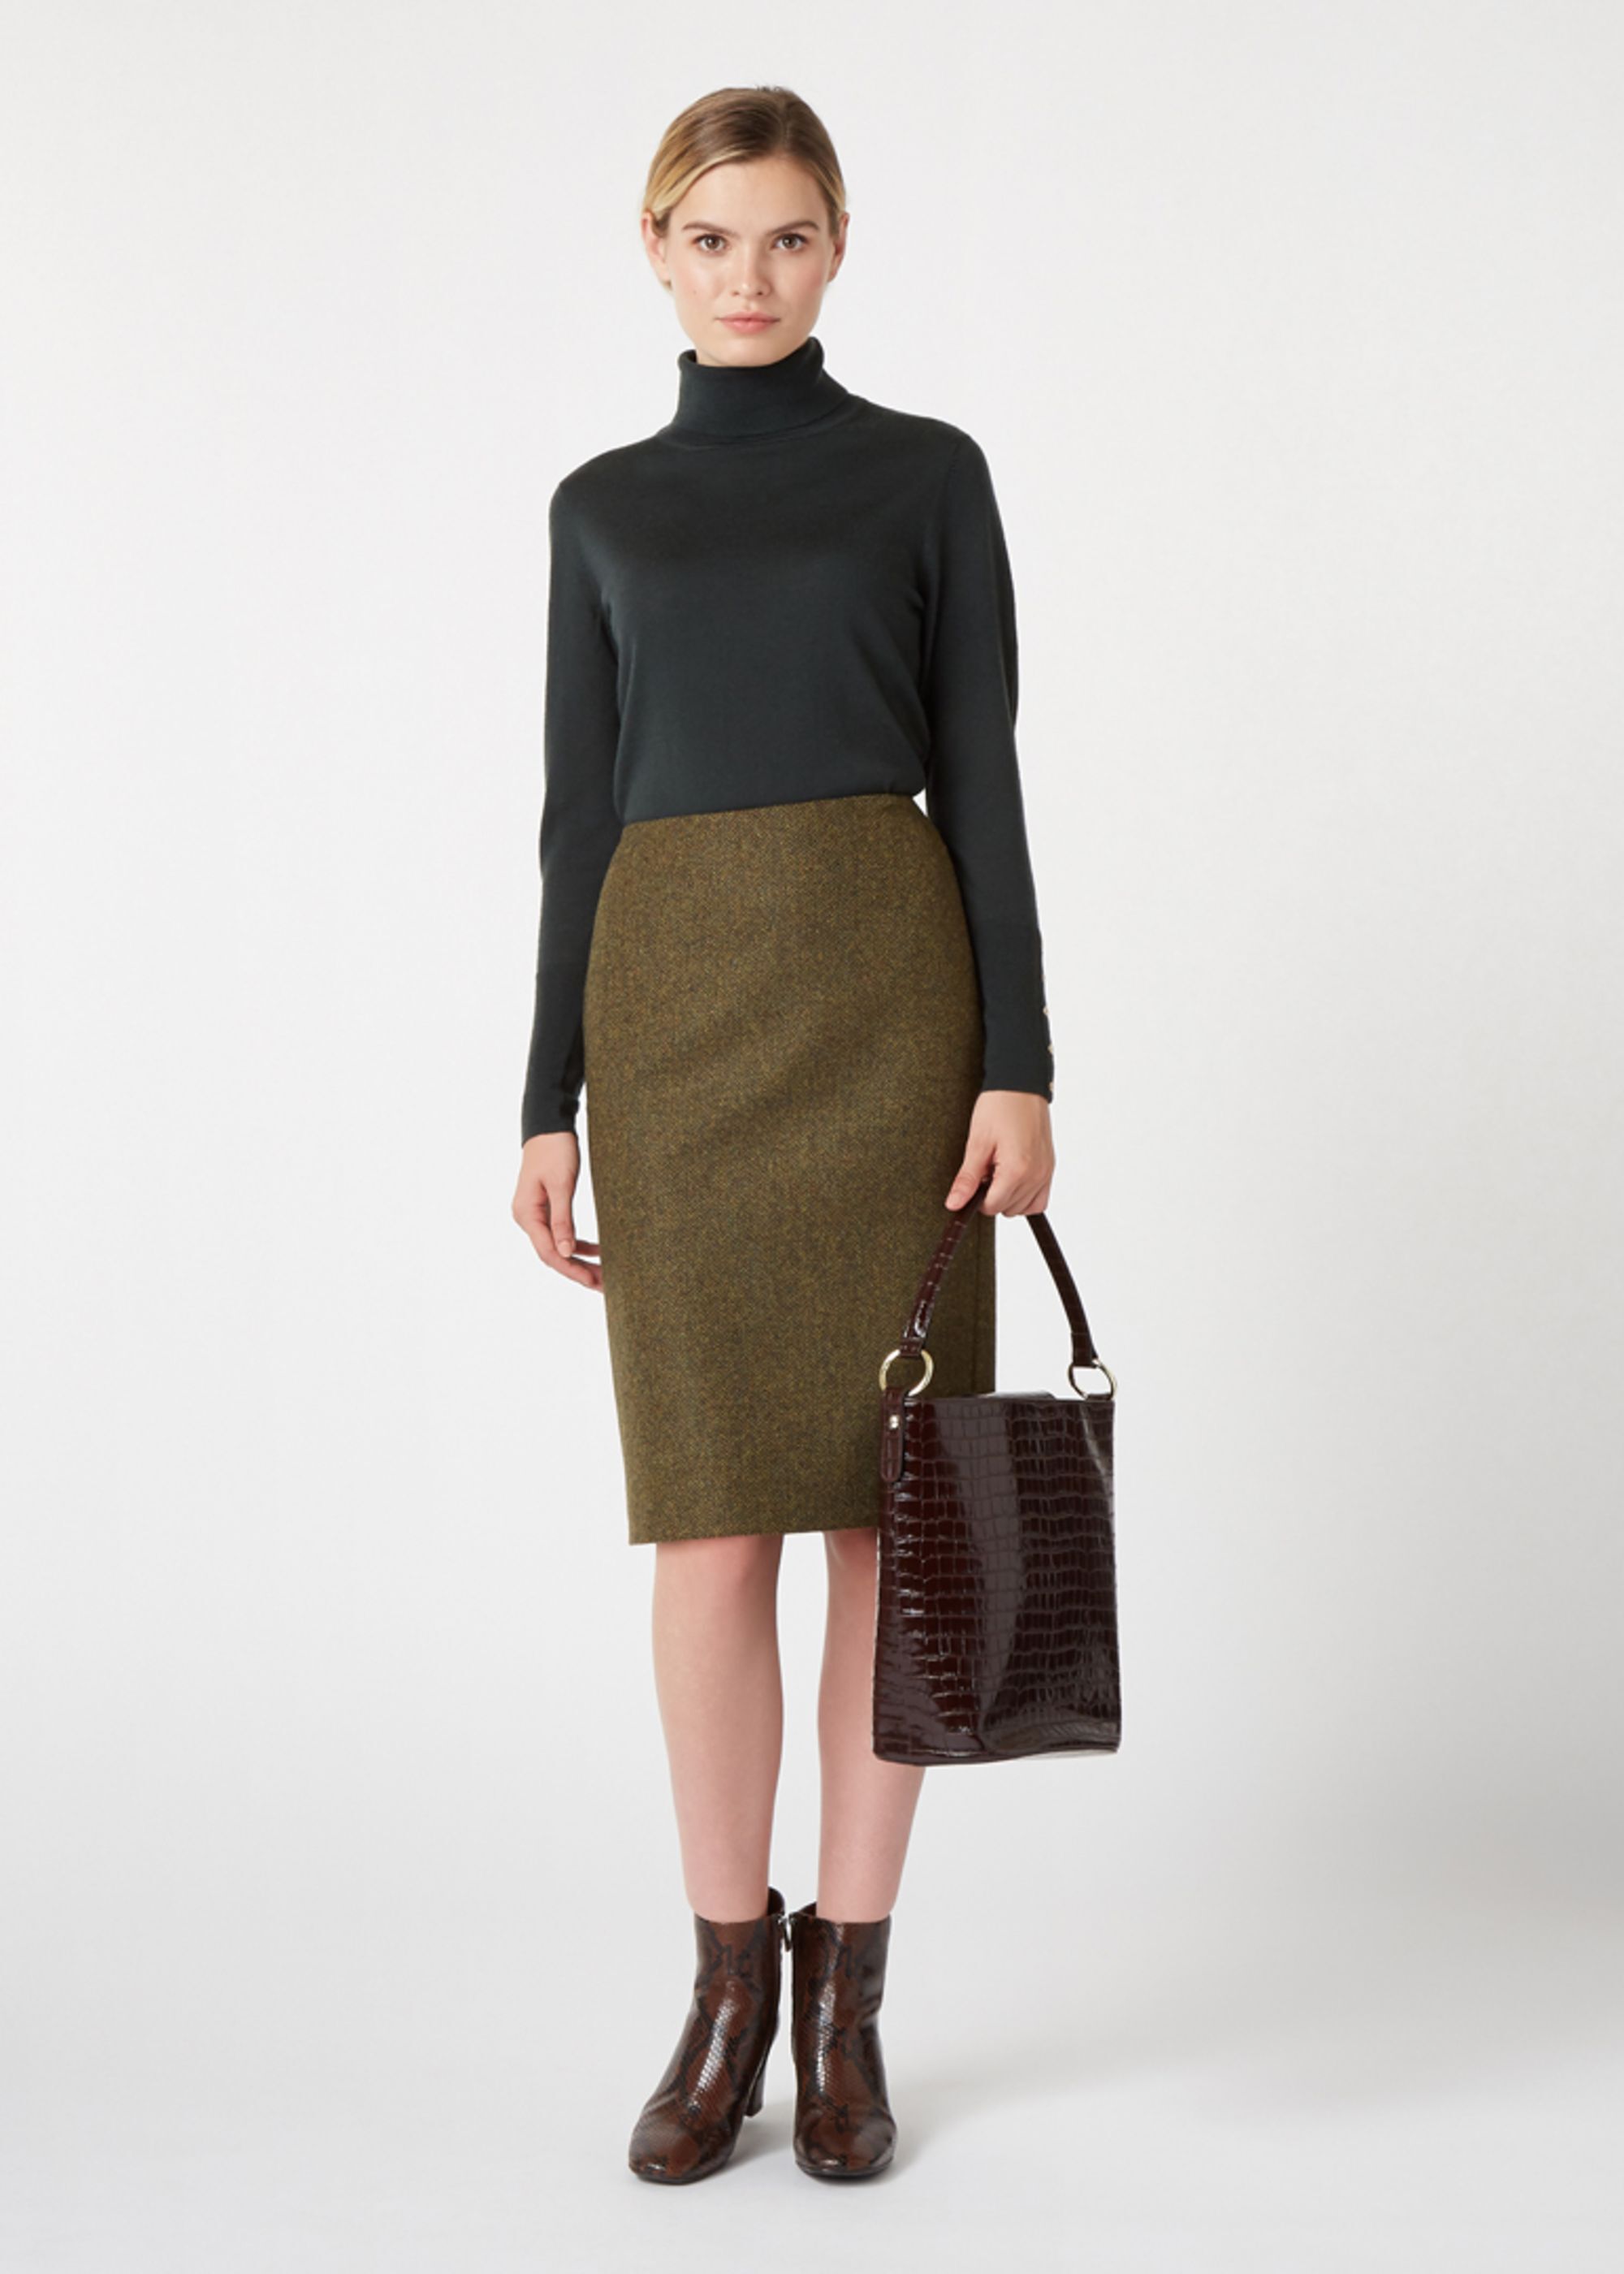 hobbs brown leather skirt